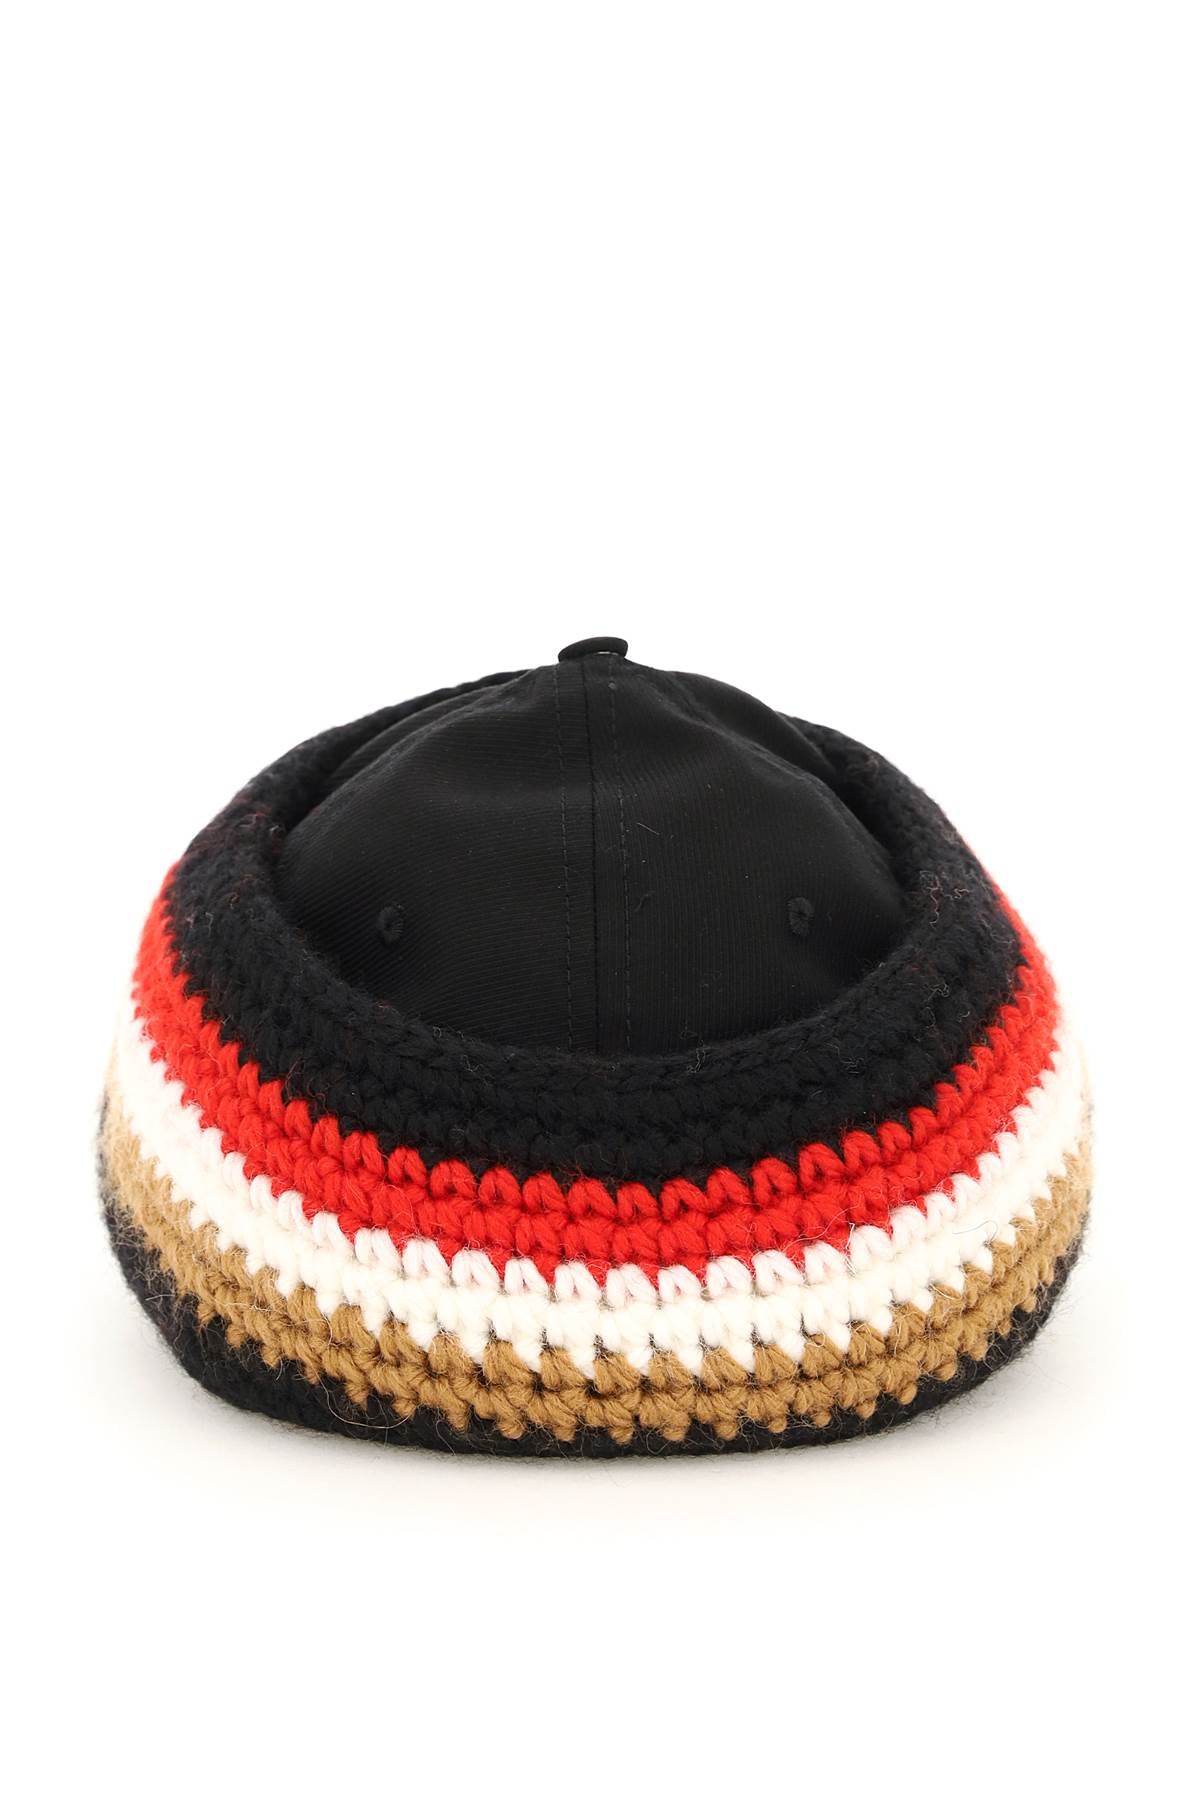 Burberry Baseball Cap With Knit Headband-Burberry-Urbanheer